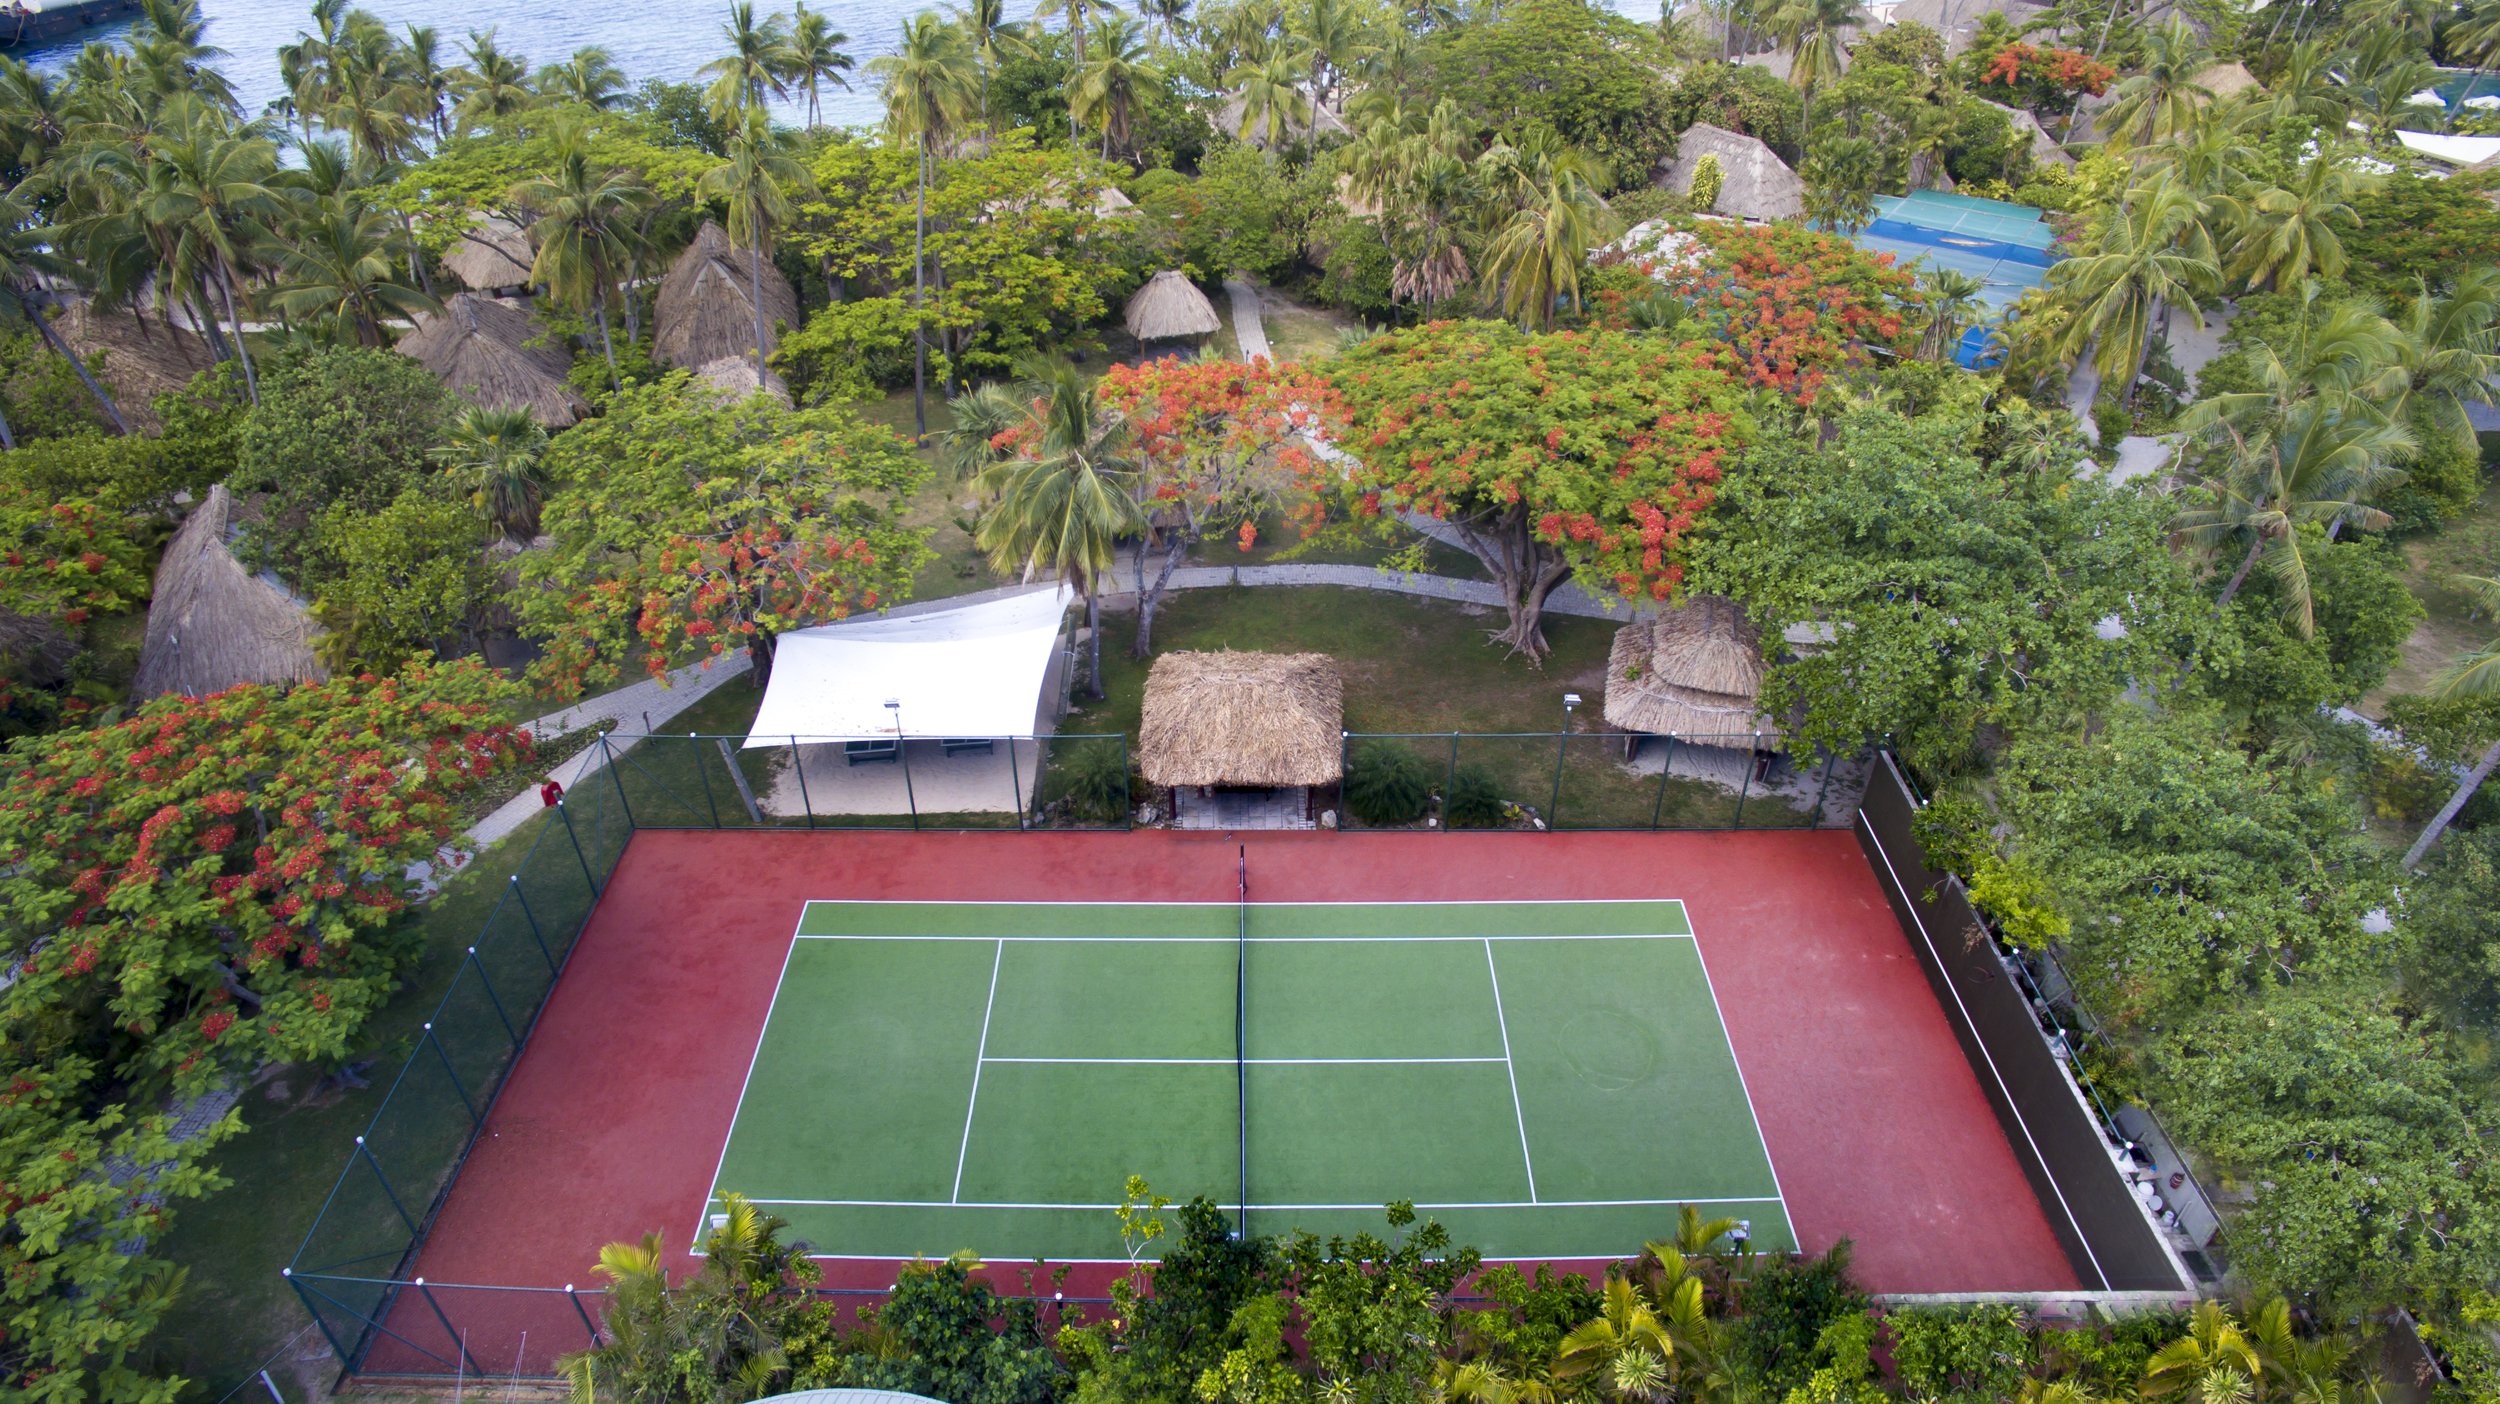 castaway-island-fiji-tennis-court1.jpg